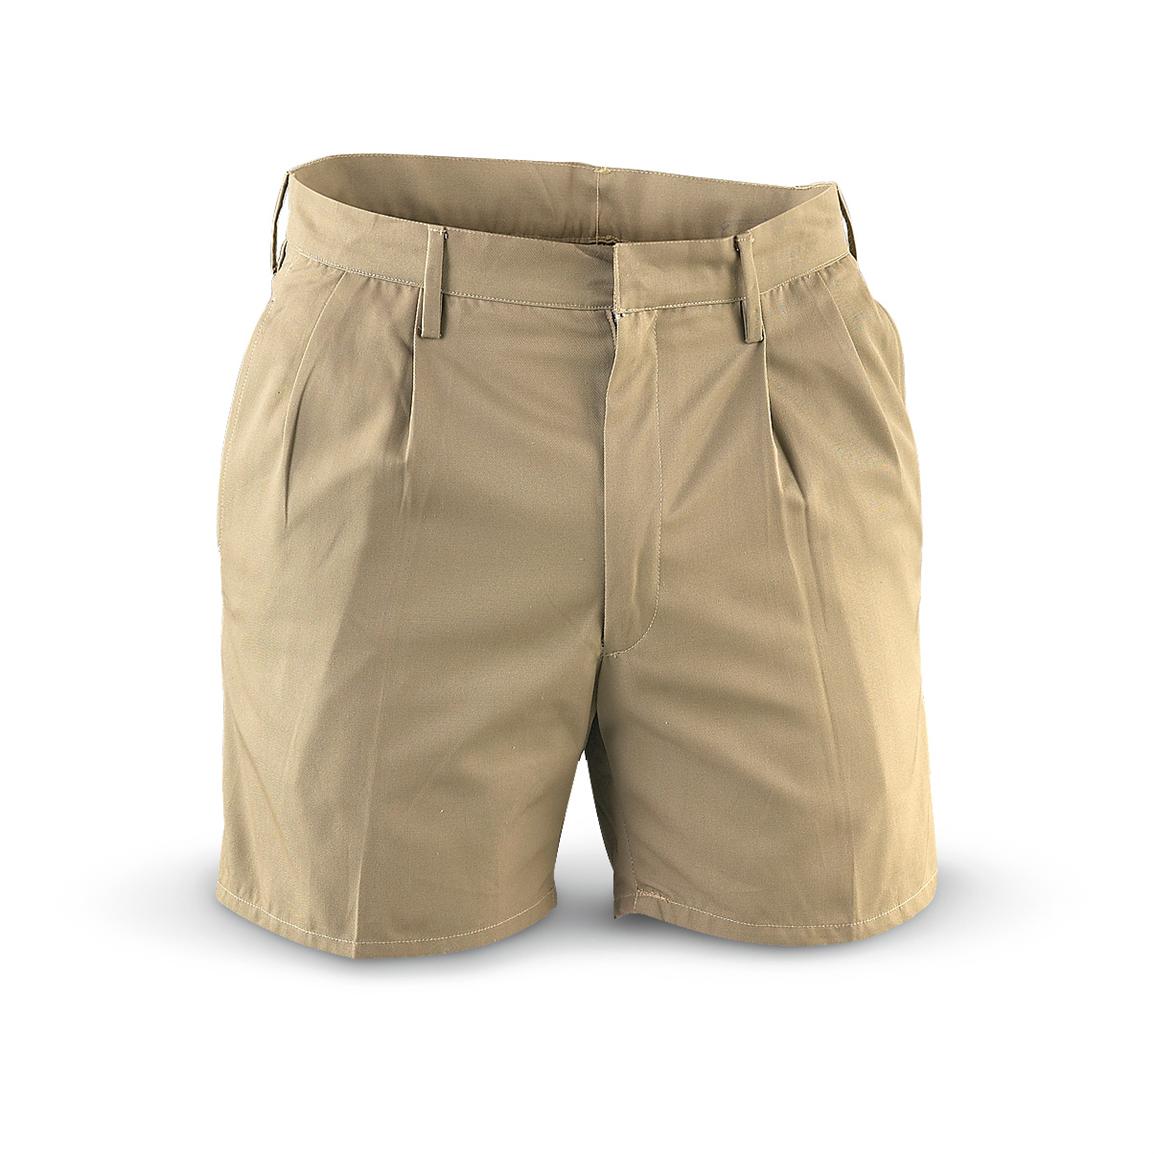 3 Used Italian Military Shorts, Khaki - 161476, Shorts at Sportsman's Guide